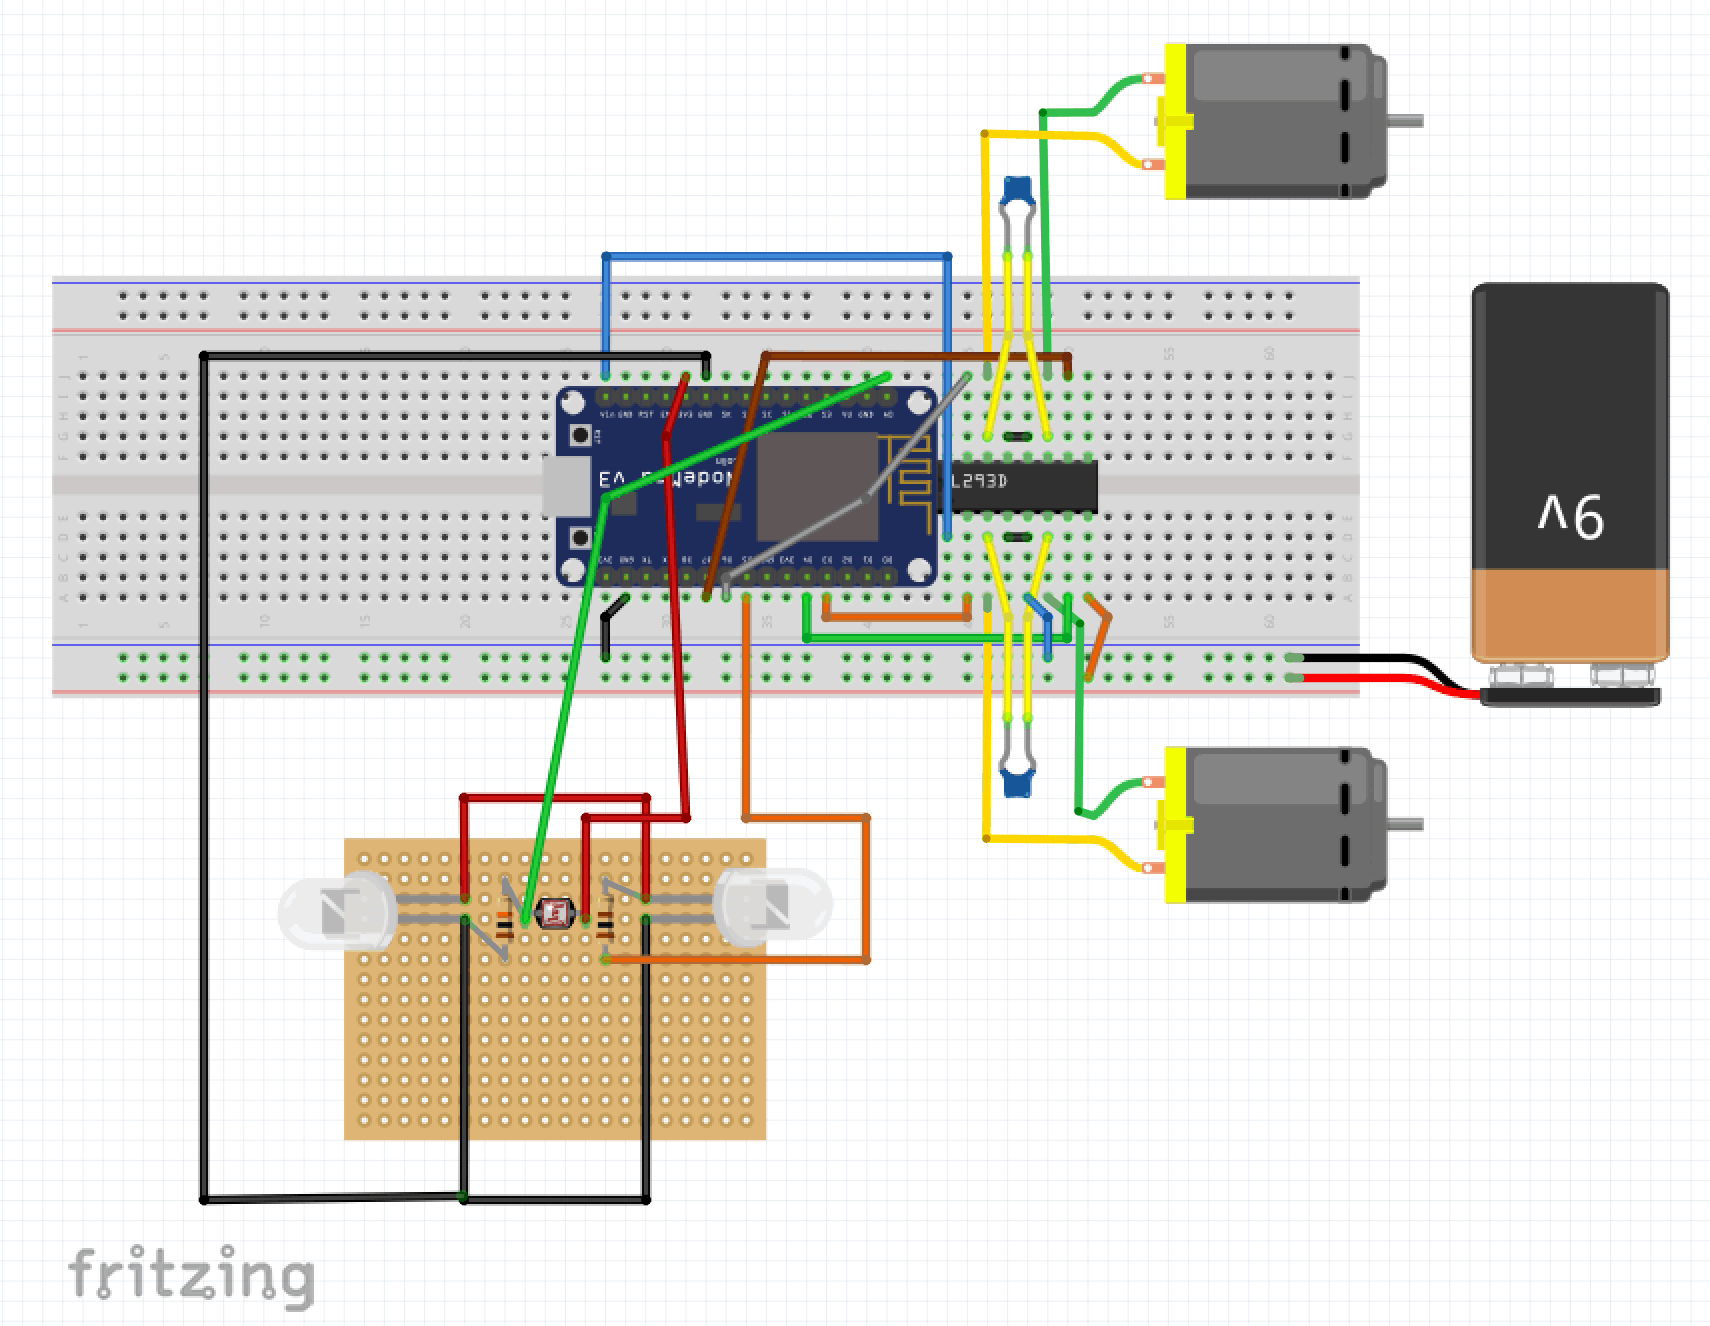 Fritzing schematic including DIY light sensor